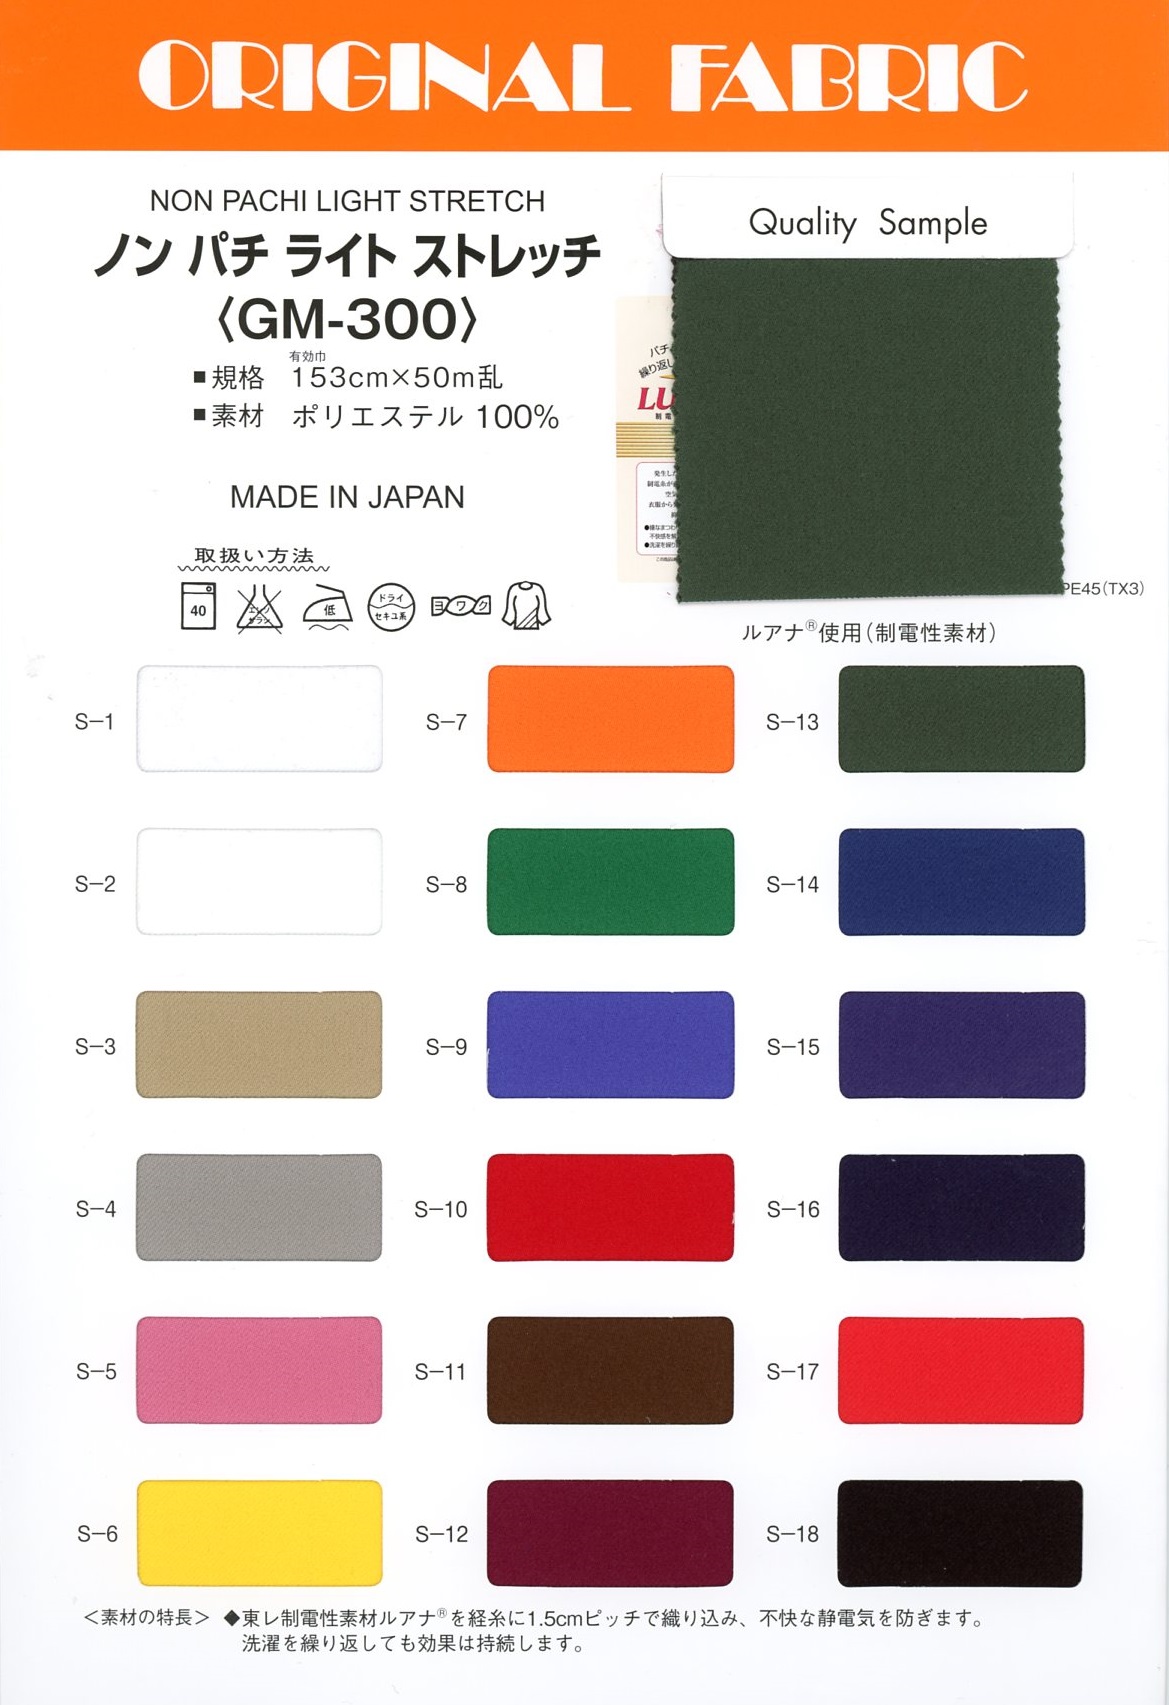 GM-300 Nicht-Pachi Light Stretch[Textilgewebe] Masuda